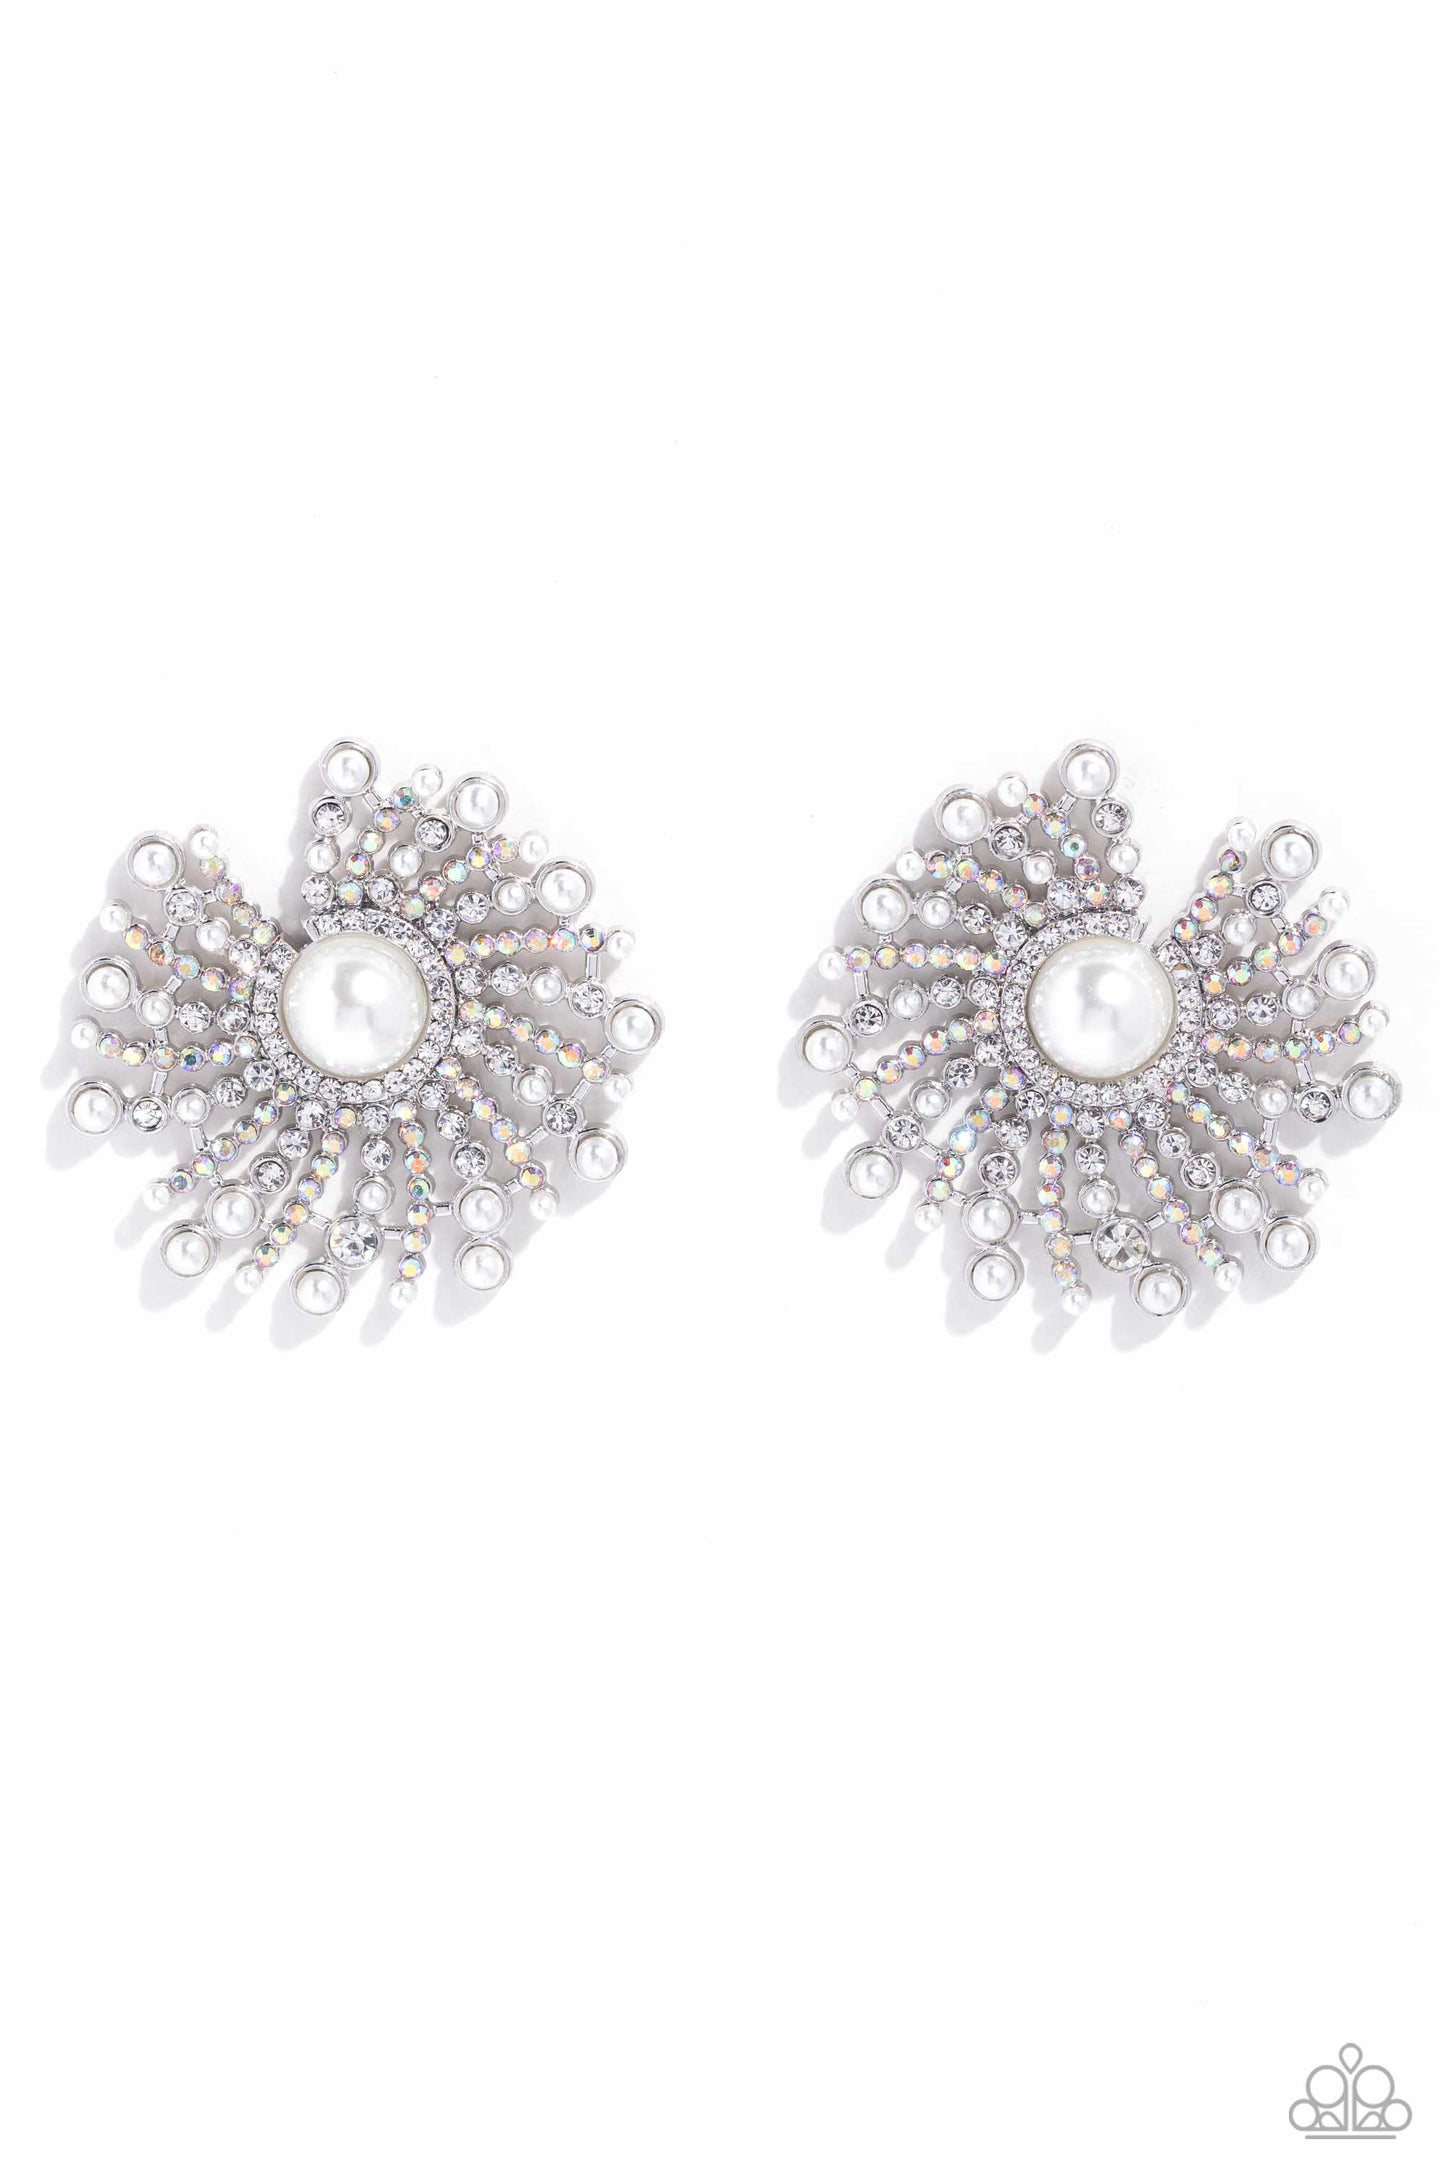 Fancy Fireworks White Earrings Paparazzi $5 Jewelry. Subscribe & Save. #P5PO-WTXX-388XX.